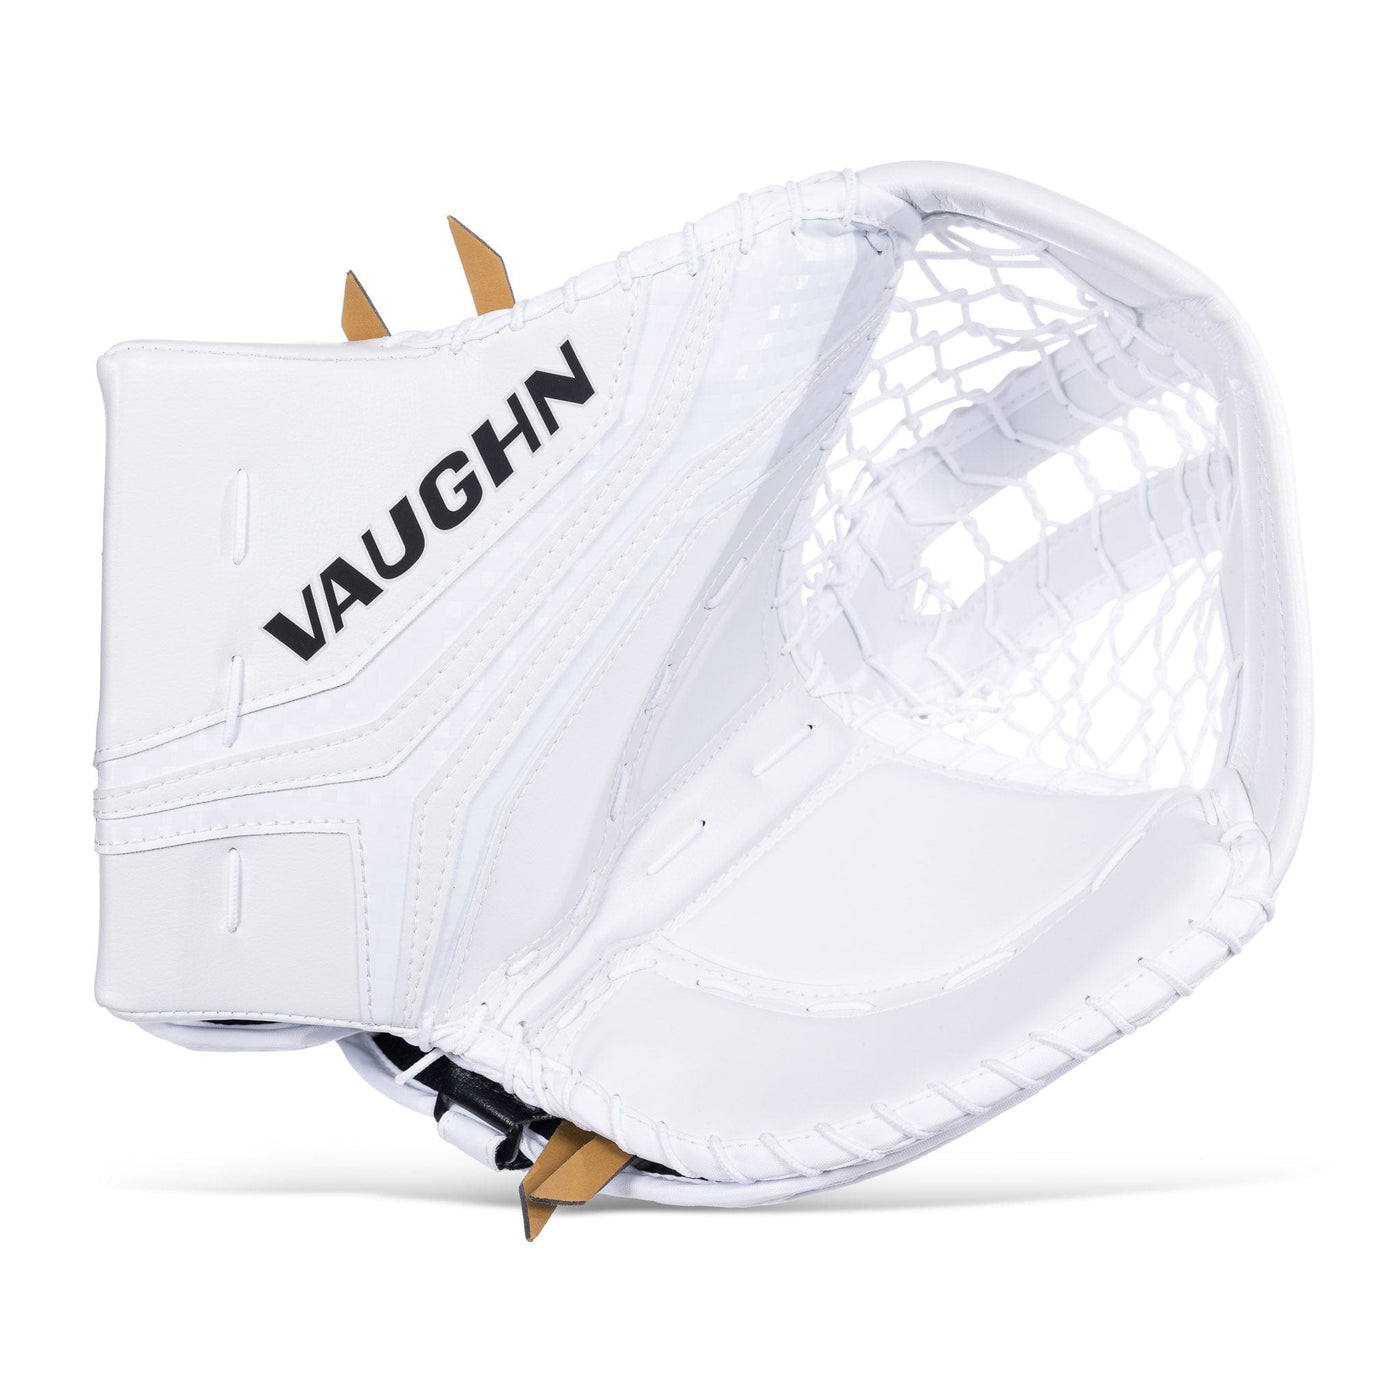 Vaughn Velocity V10 Pro Senior Goalie Catcher - The Hockey Shop Source For Sports